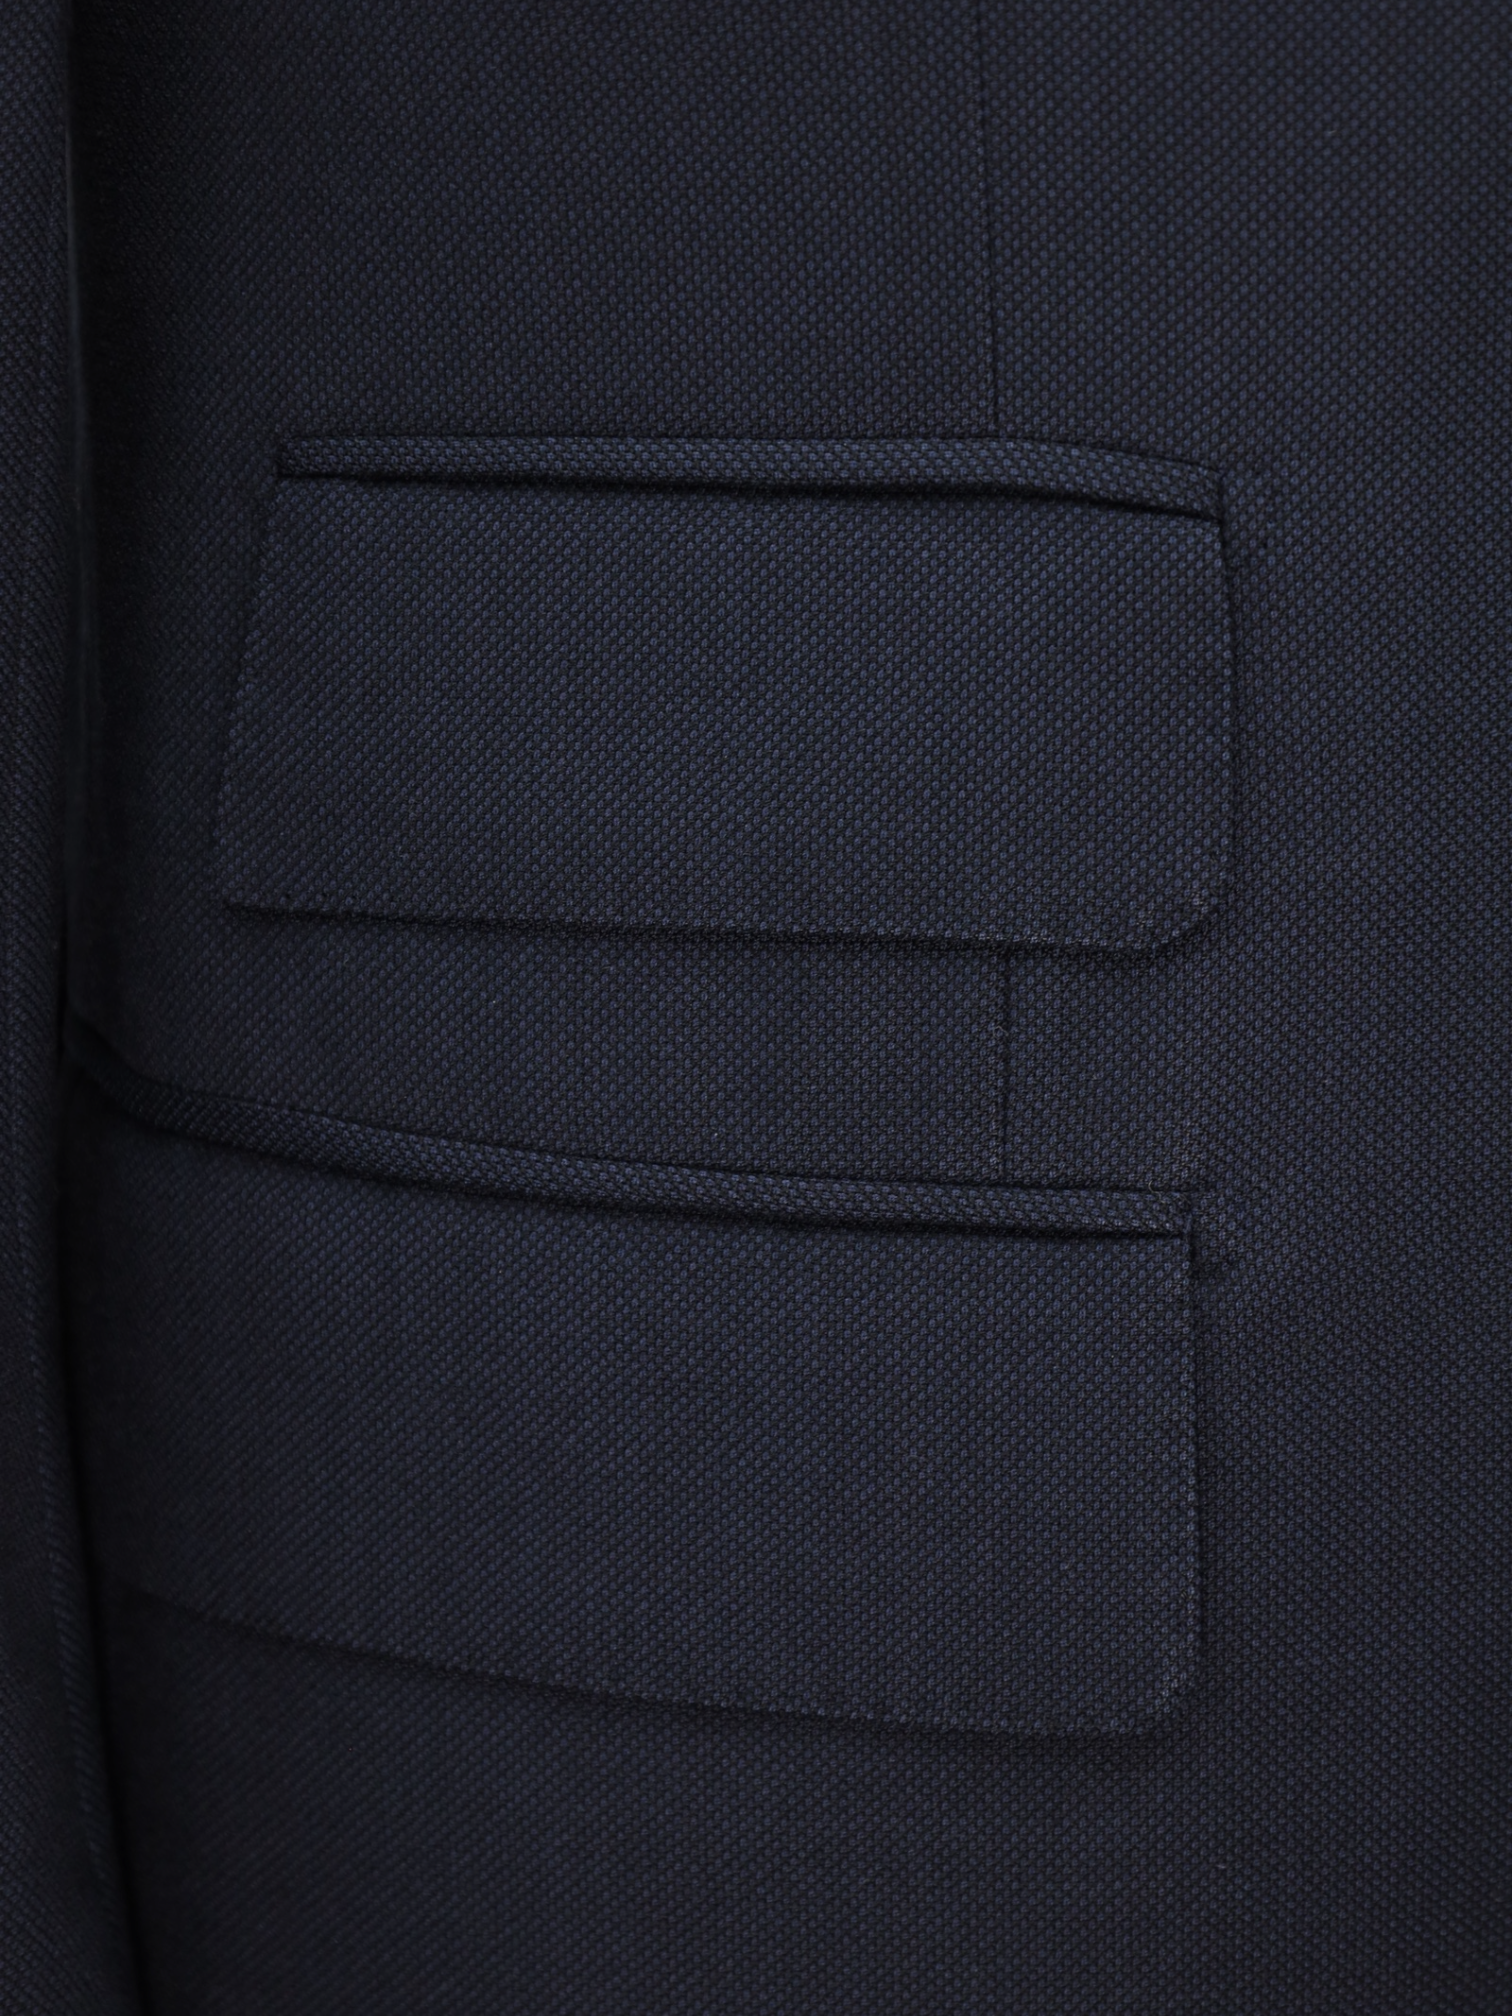 Henry Poole Navy Bespoke Birdseye Suit